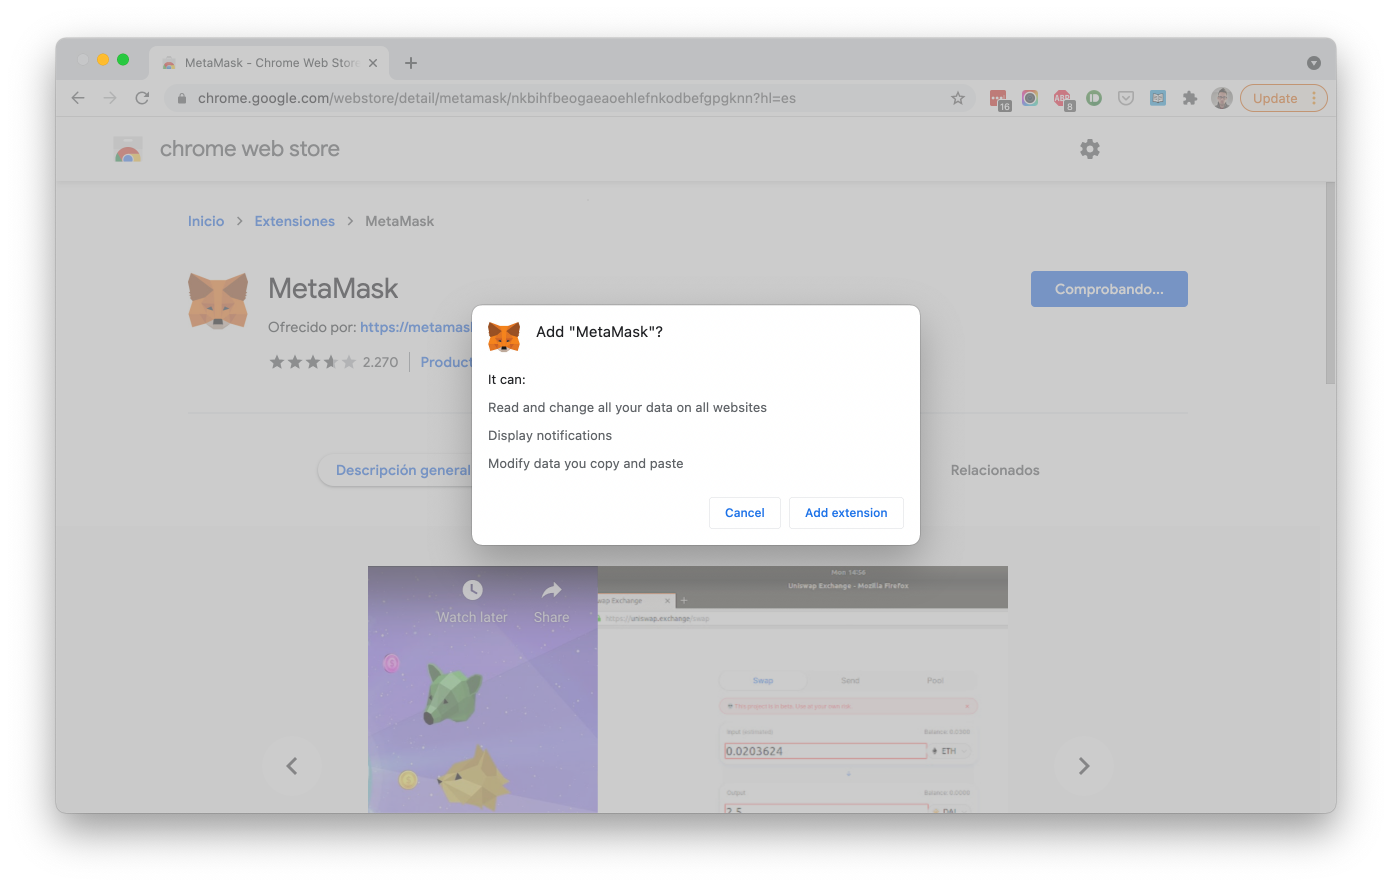 Chrome Web Store - MetaMask permissions